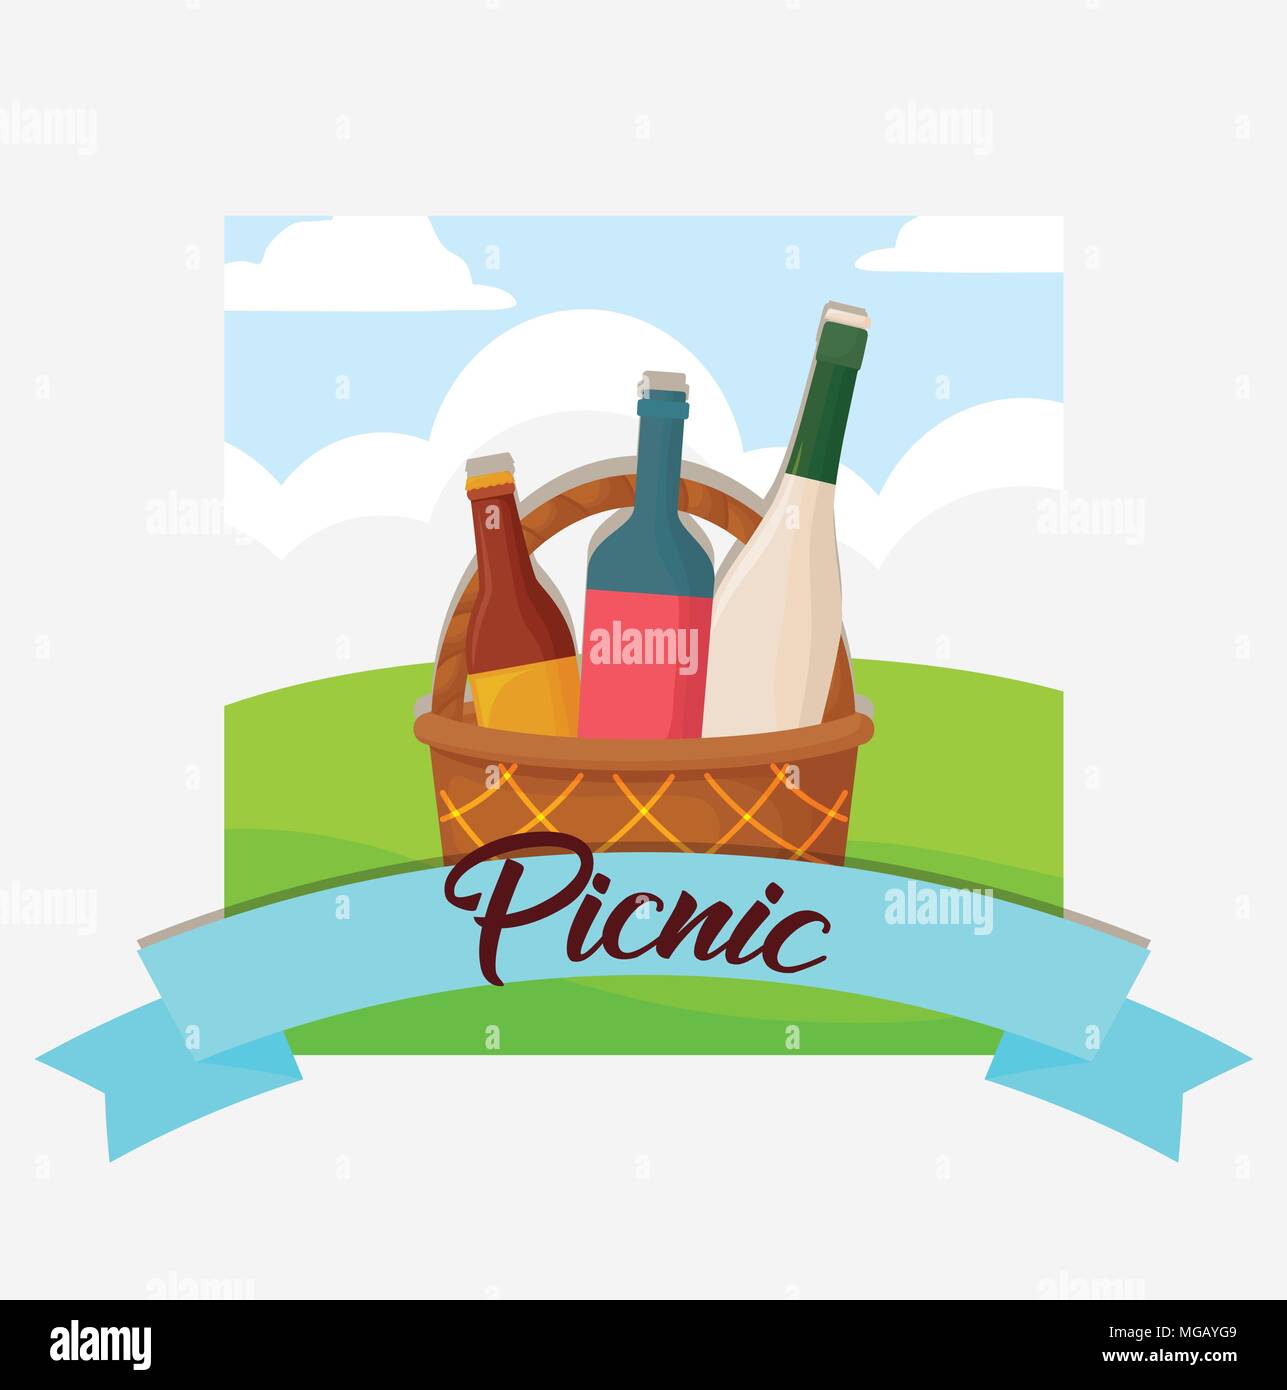 Picnic food emblem with basket and drink bottles over landscape and white  background, colorful design. vector illustration Stock Vector